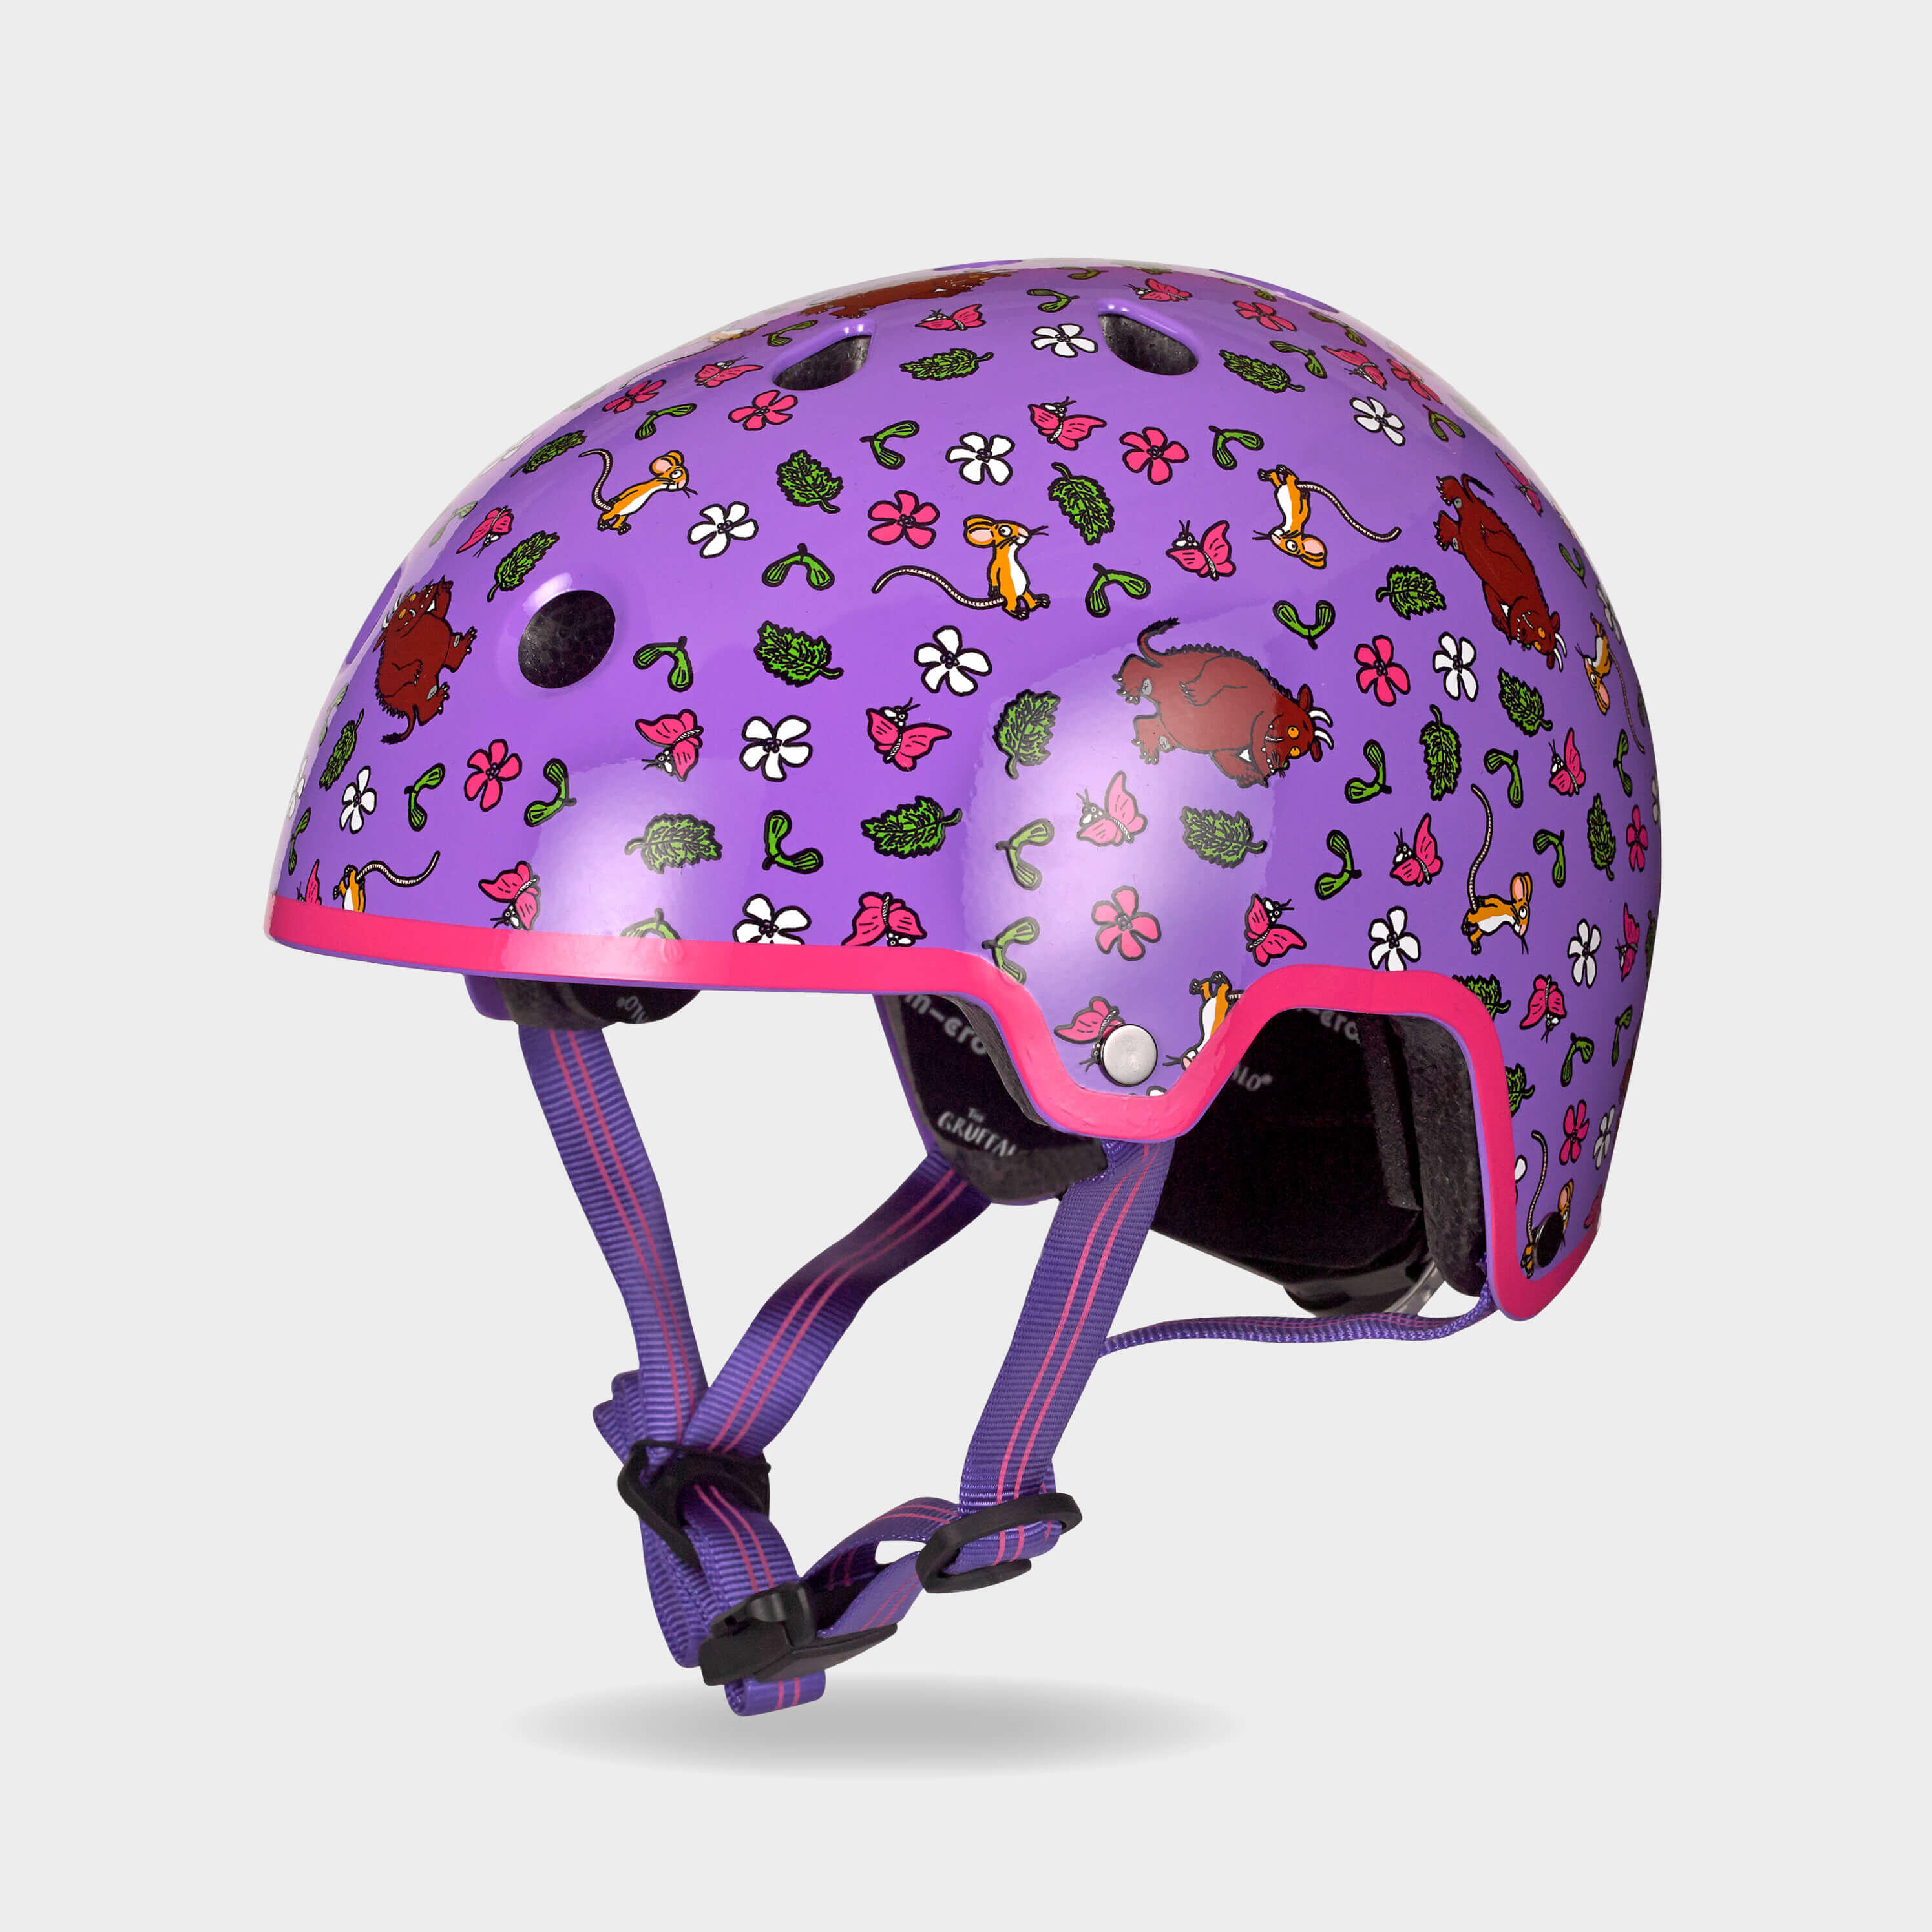 MICRO Micro Deluxe Helmet: Gruffalo Purple